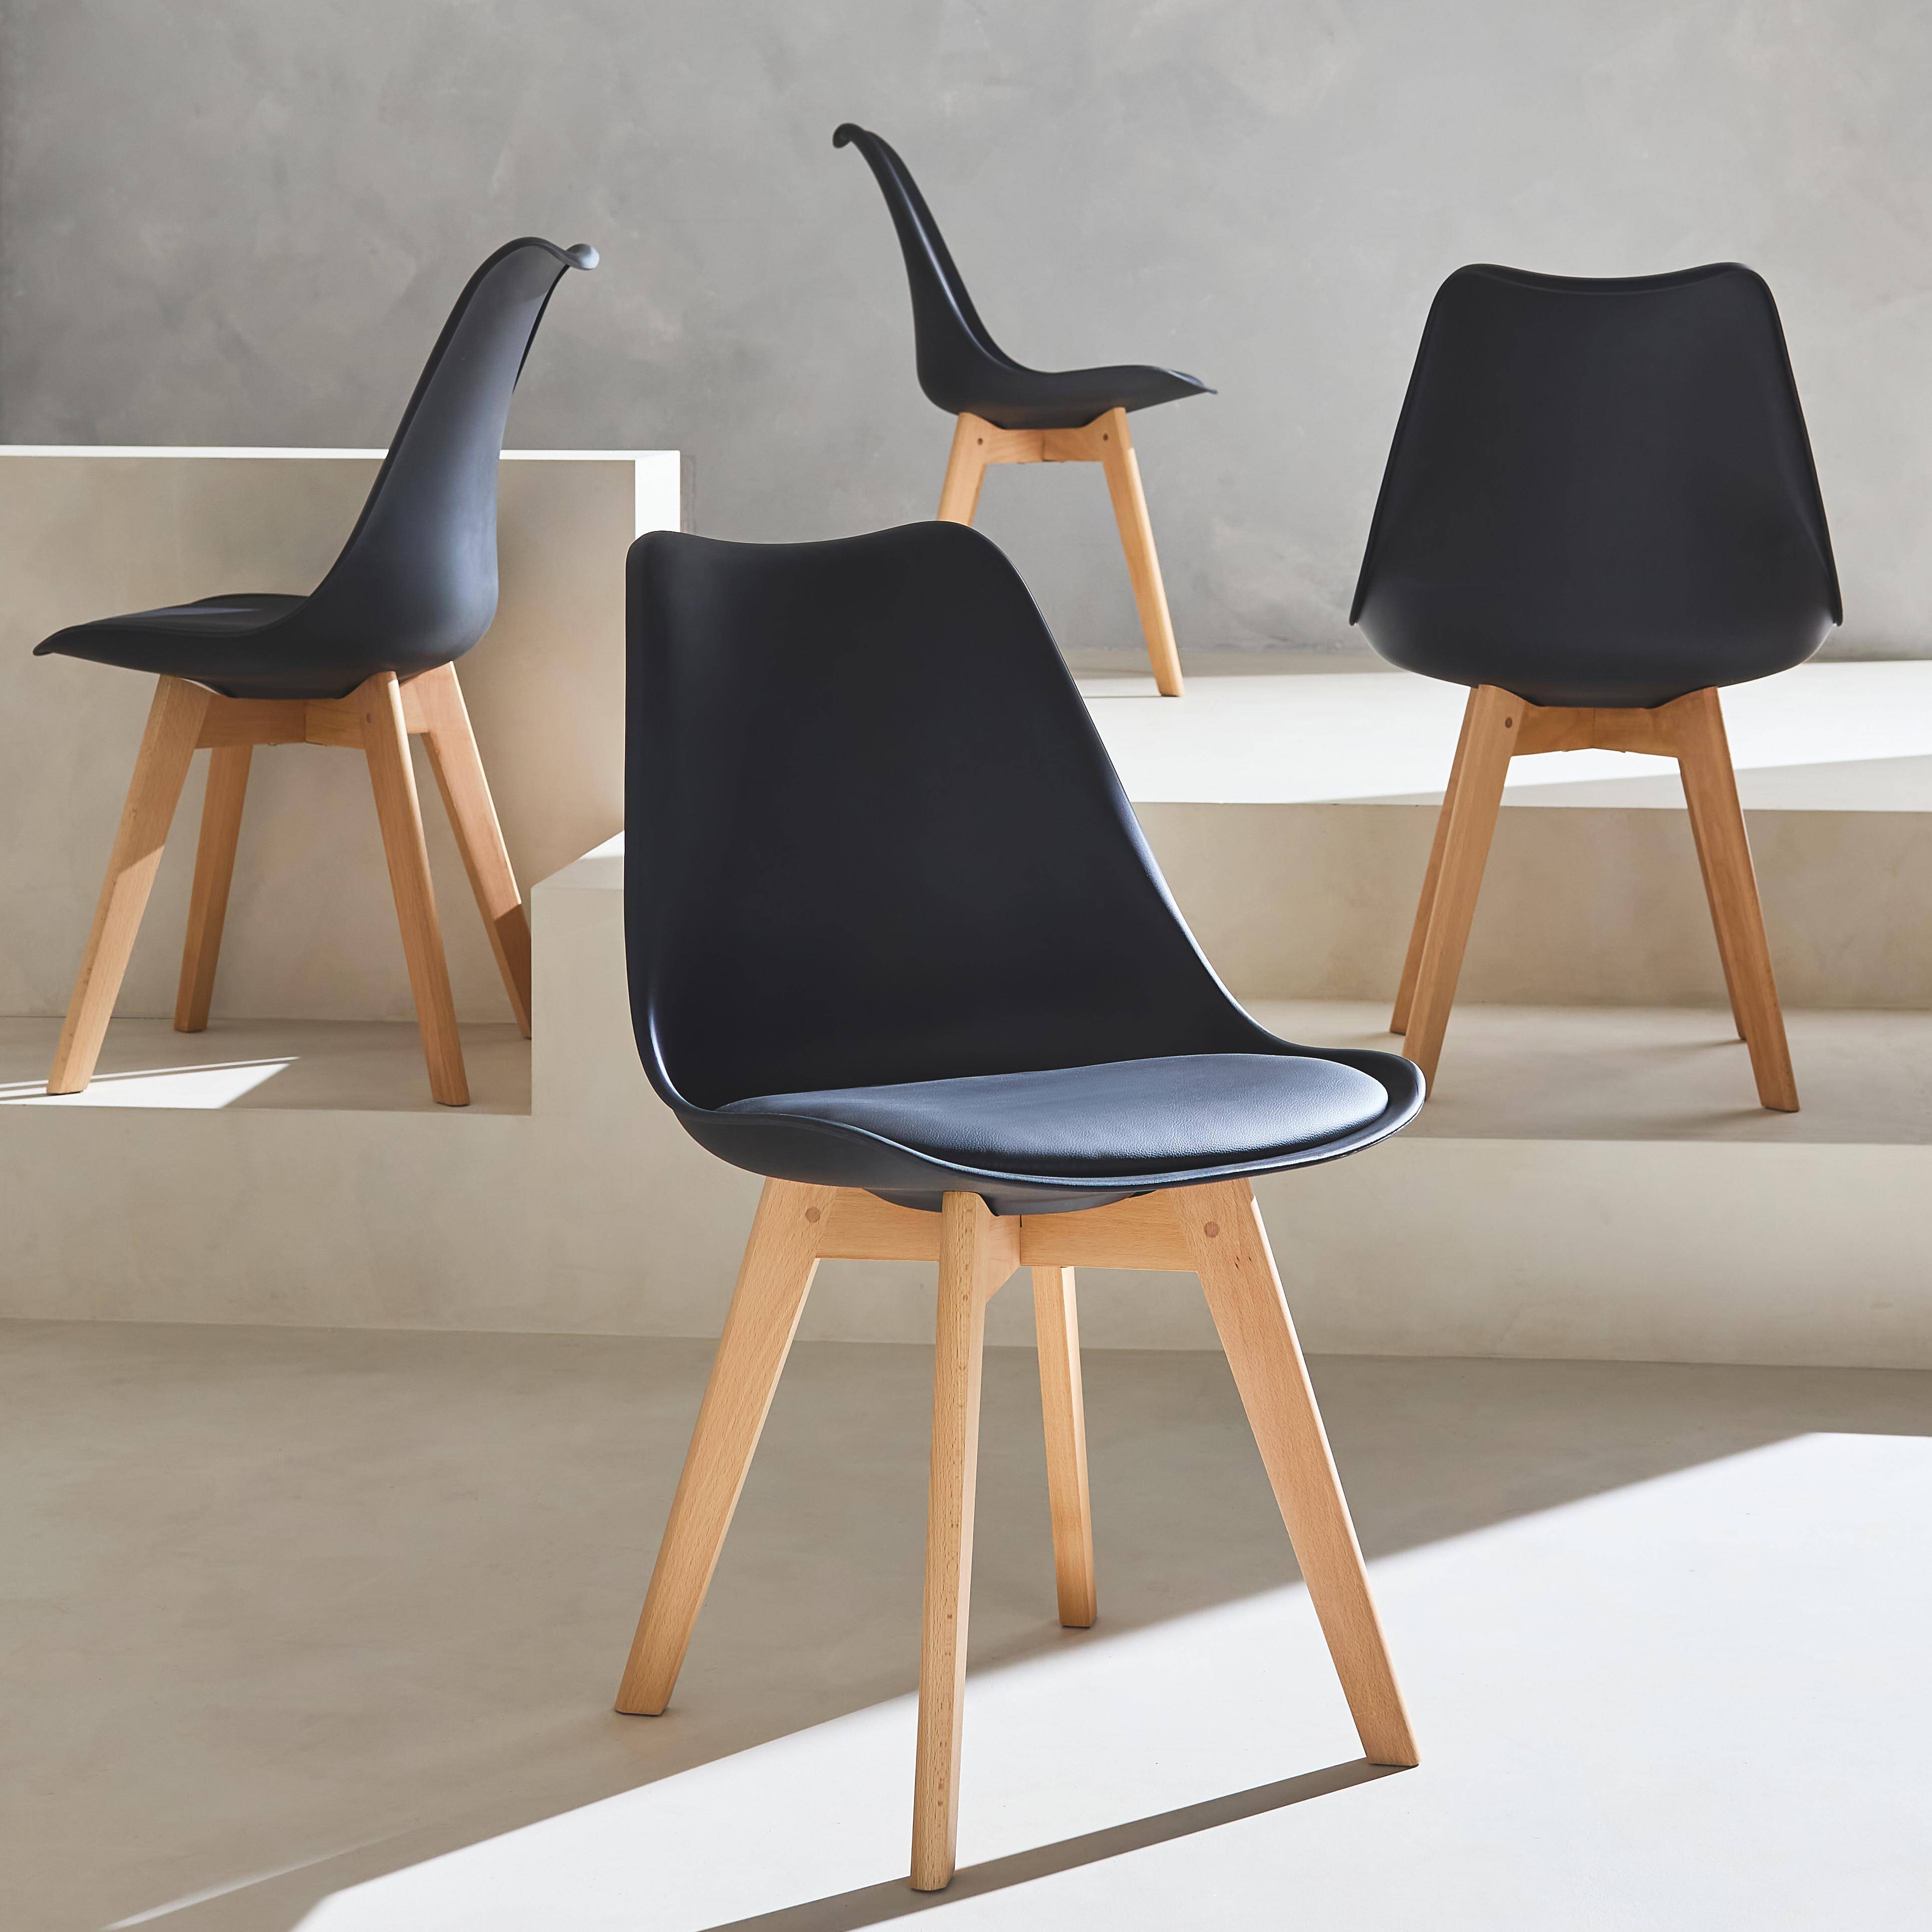 Set of 4 Scandinavian chairs, beechwood legs, 1-seater chair, black,sweeek,Photo2